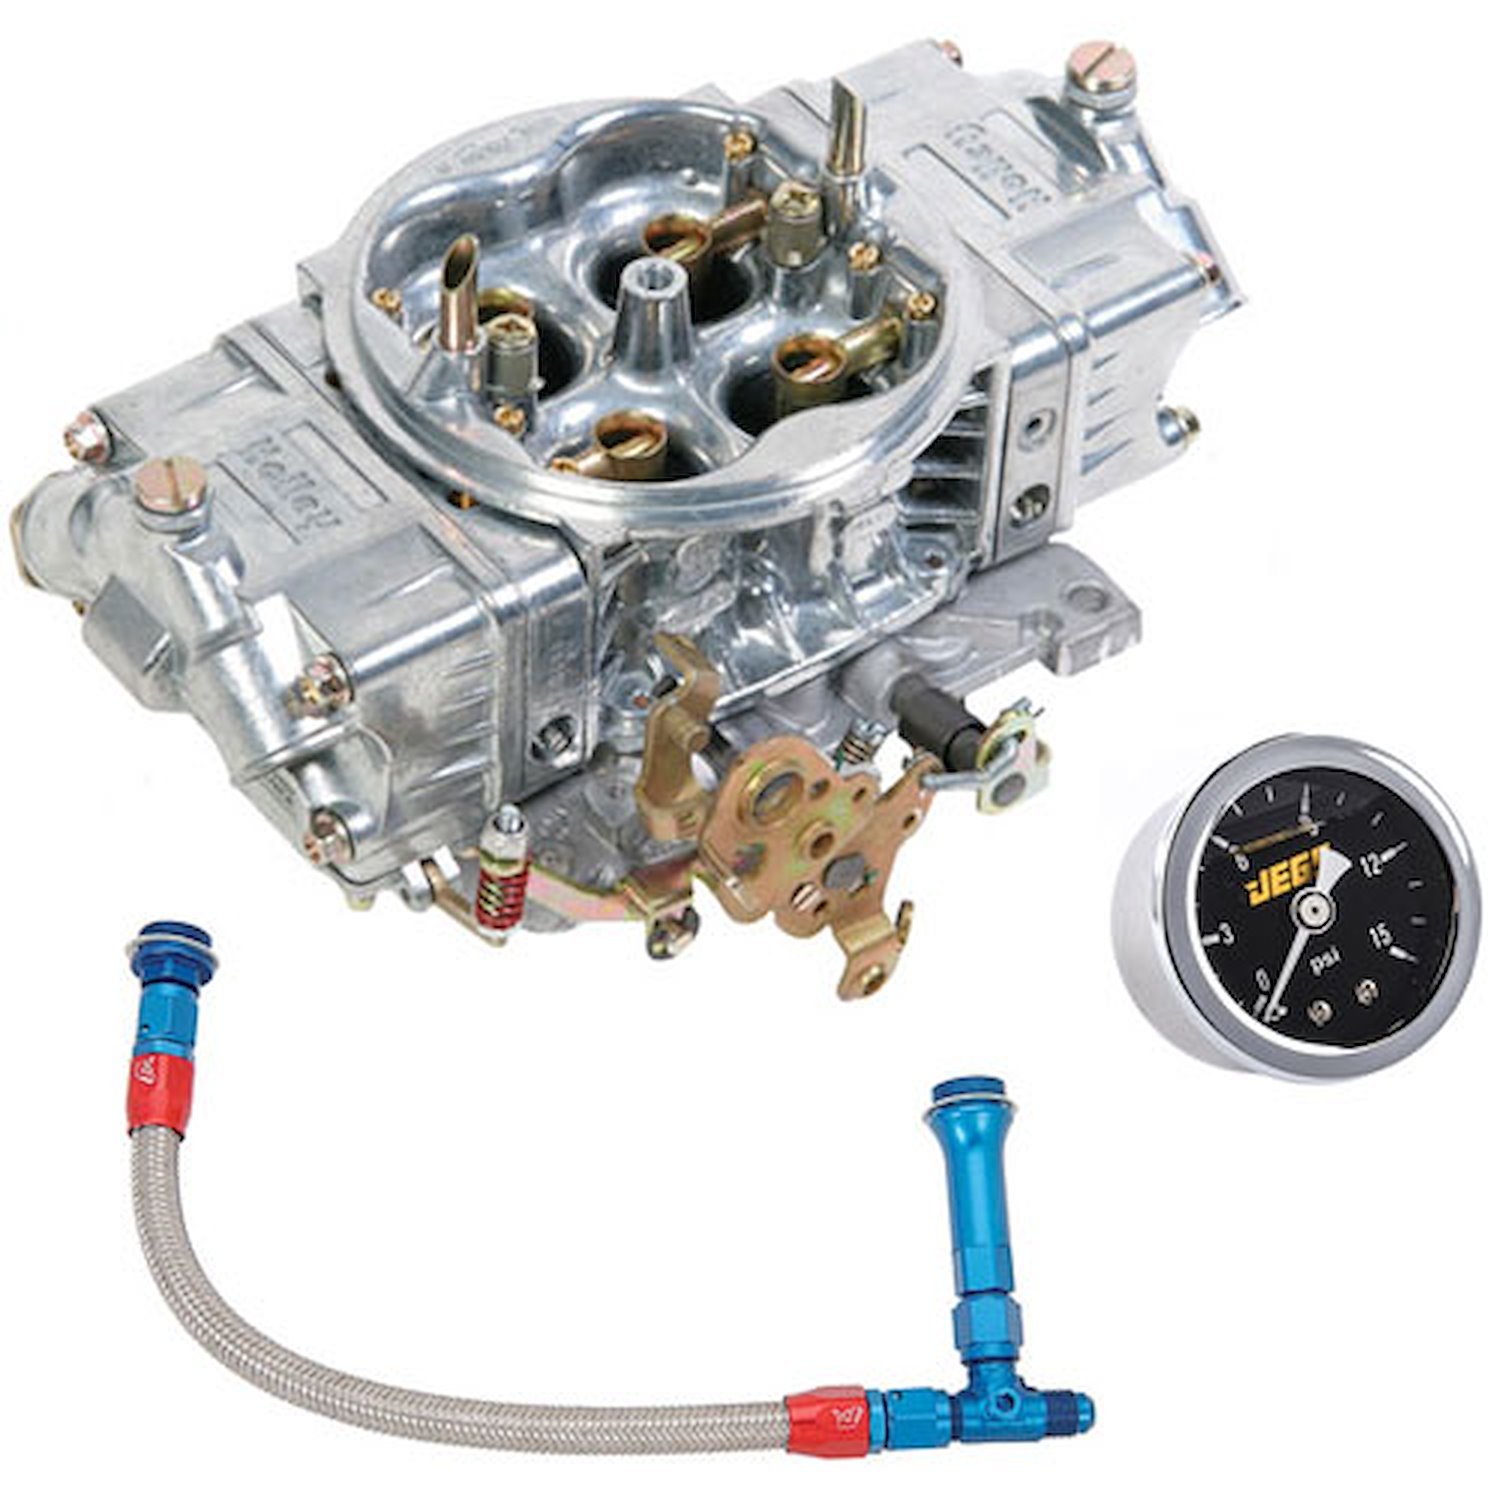 Street HP Carburetor Kit Includes: 850 CFM Carburetor